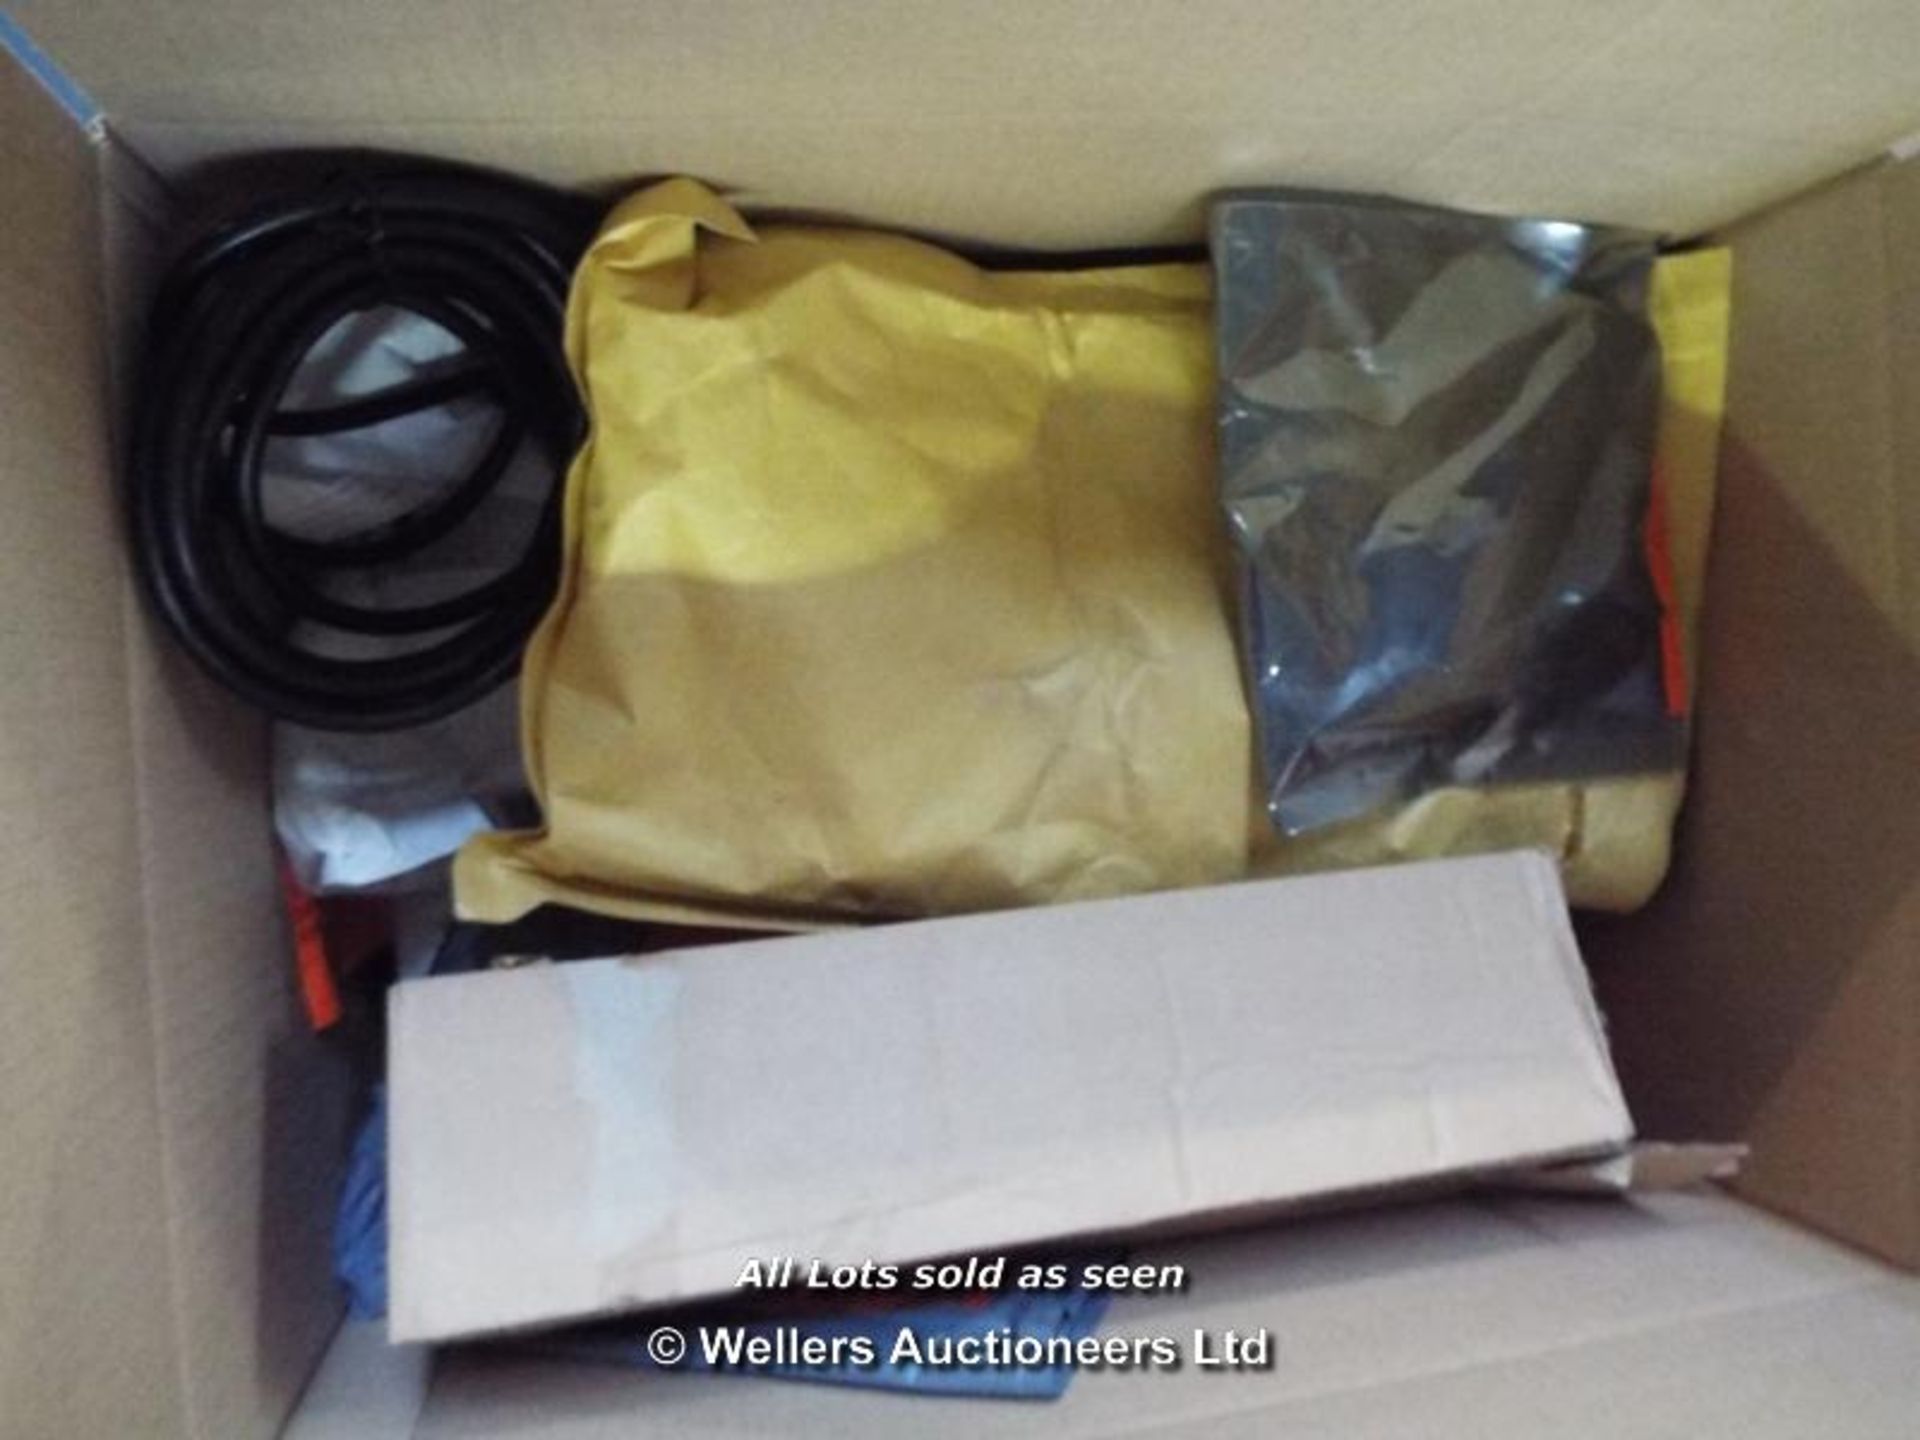 BOX OF: XENTA VGA MONITOR REPLACEMENT CABLE MALE - MALE (BLACK) 3M / APOTOP WIFI READER / XENTA